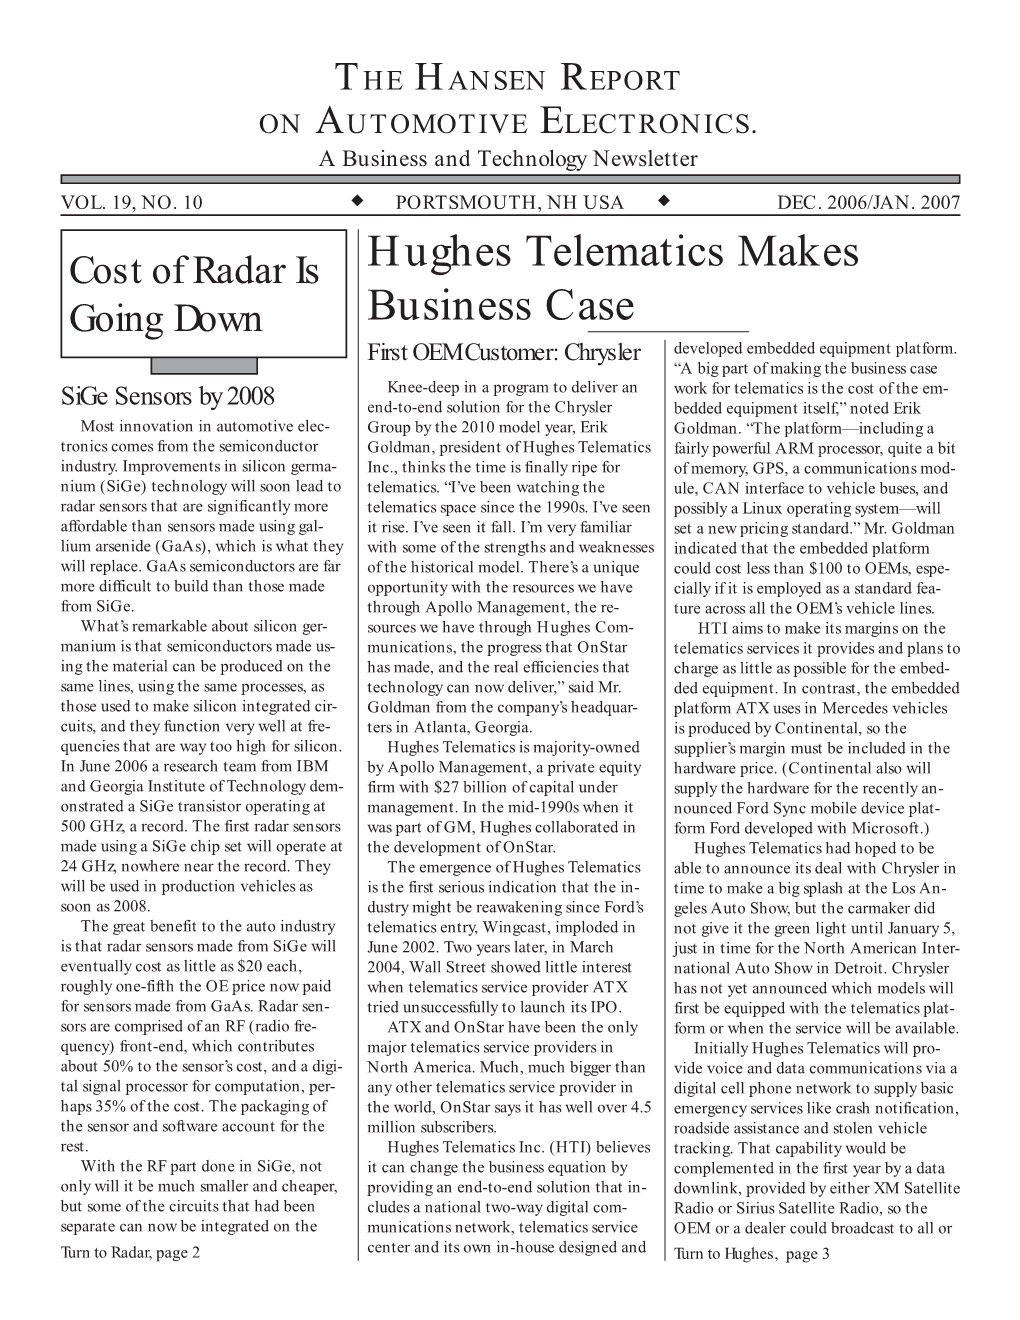 Hughes Telematics Makes Business Case